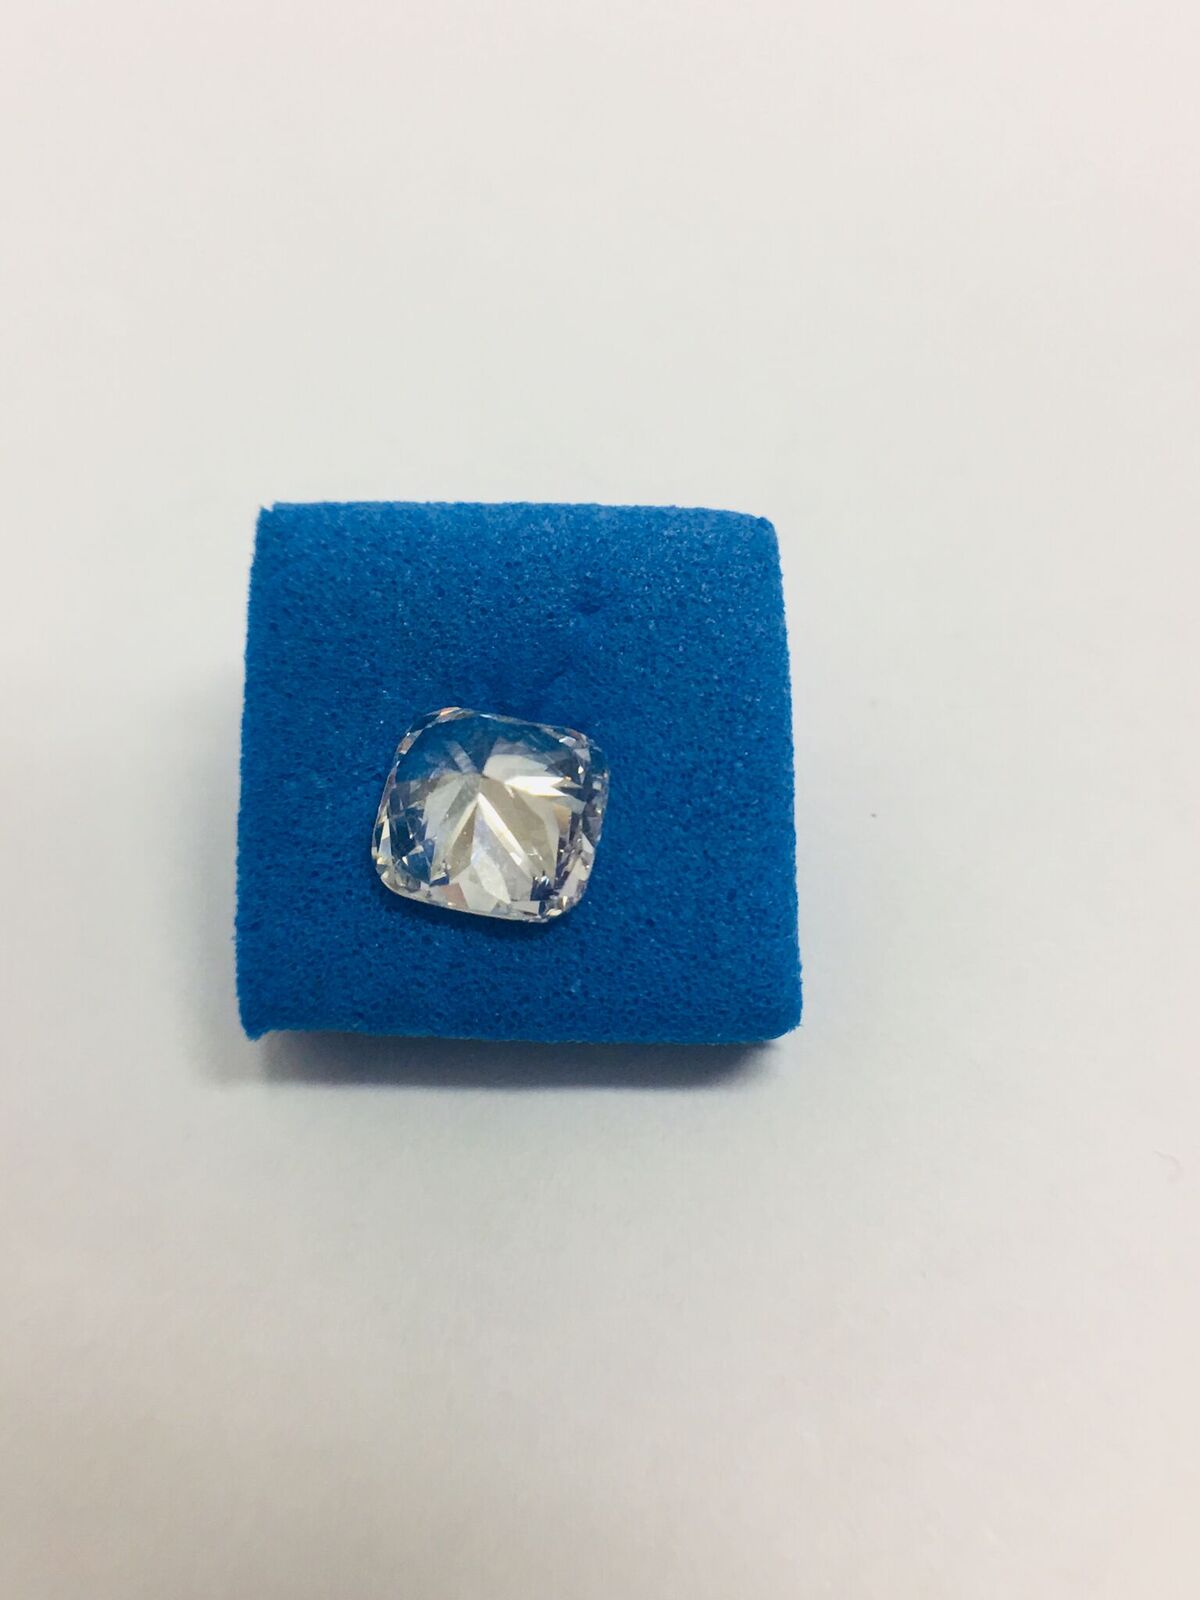 1.00ct cushion cut natural diamond - Image 13 of 14